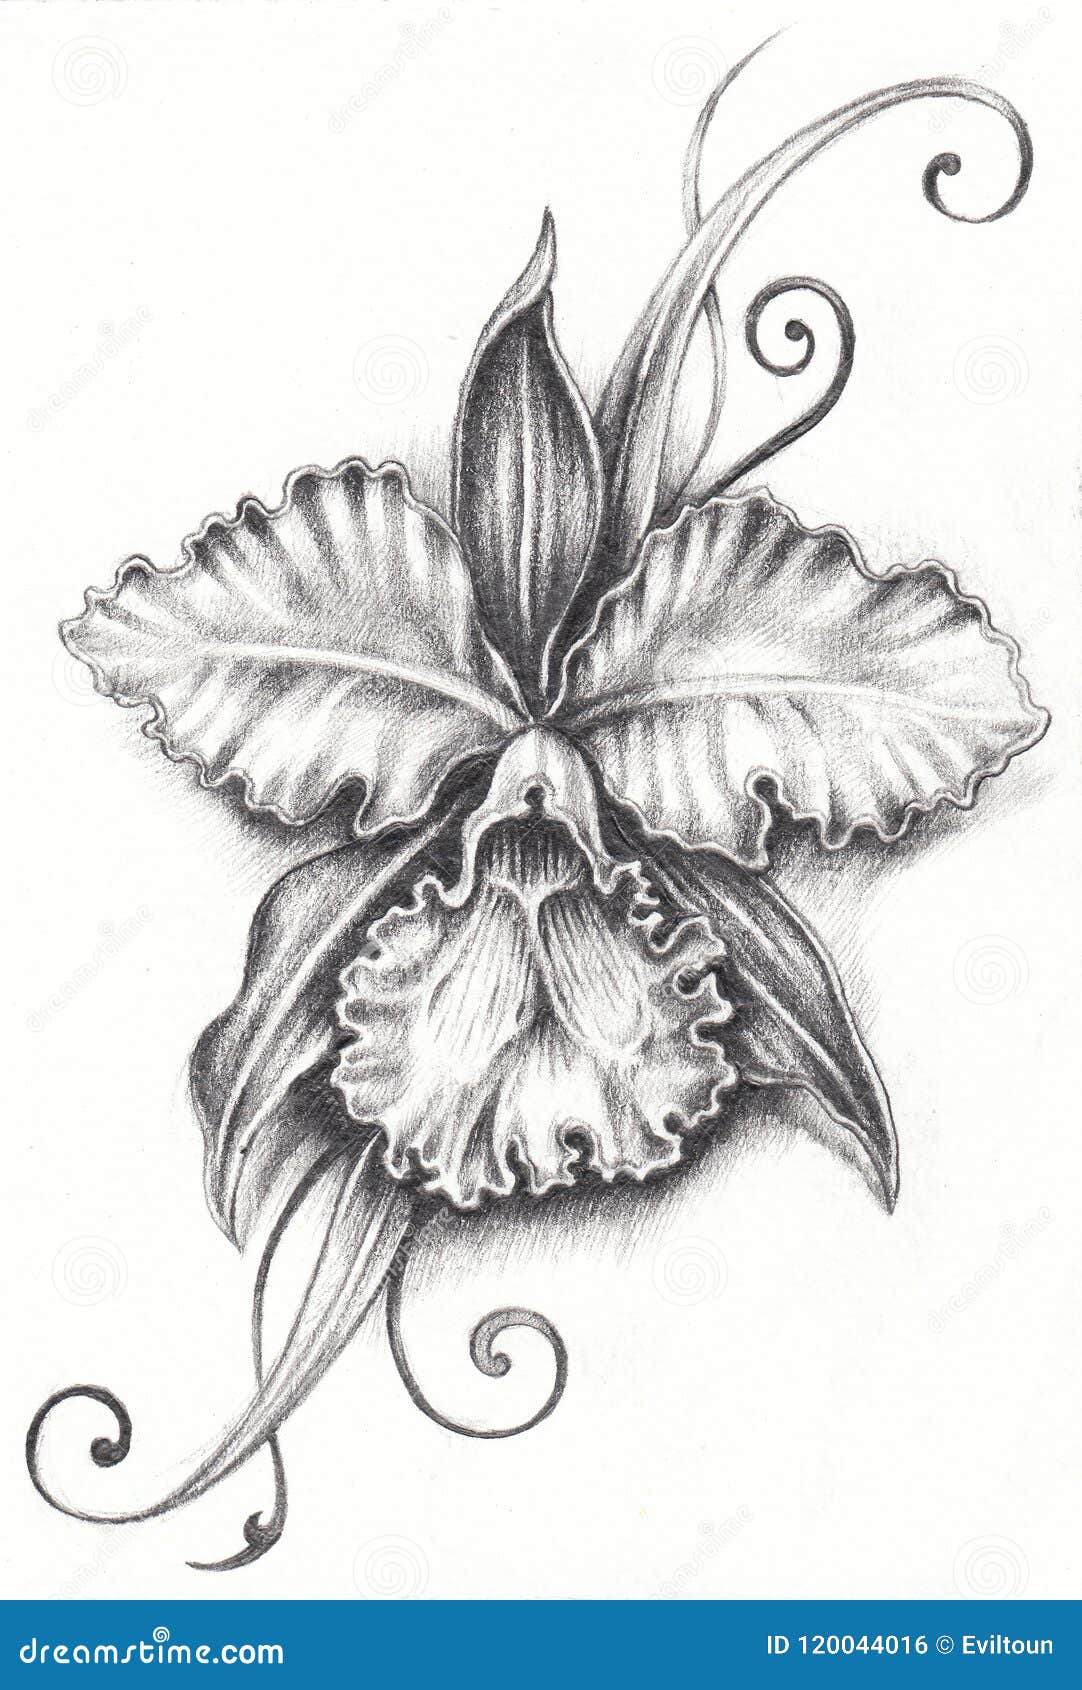 Cattleya orchid tattoo design